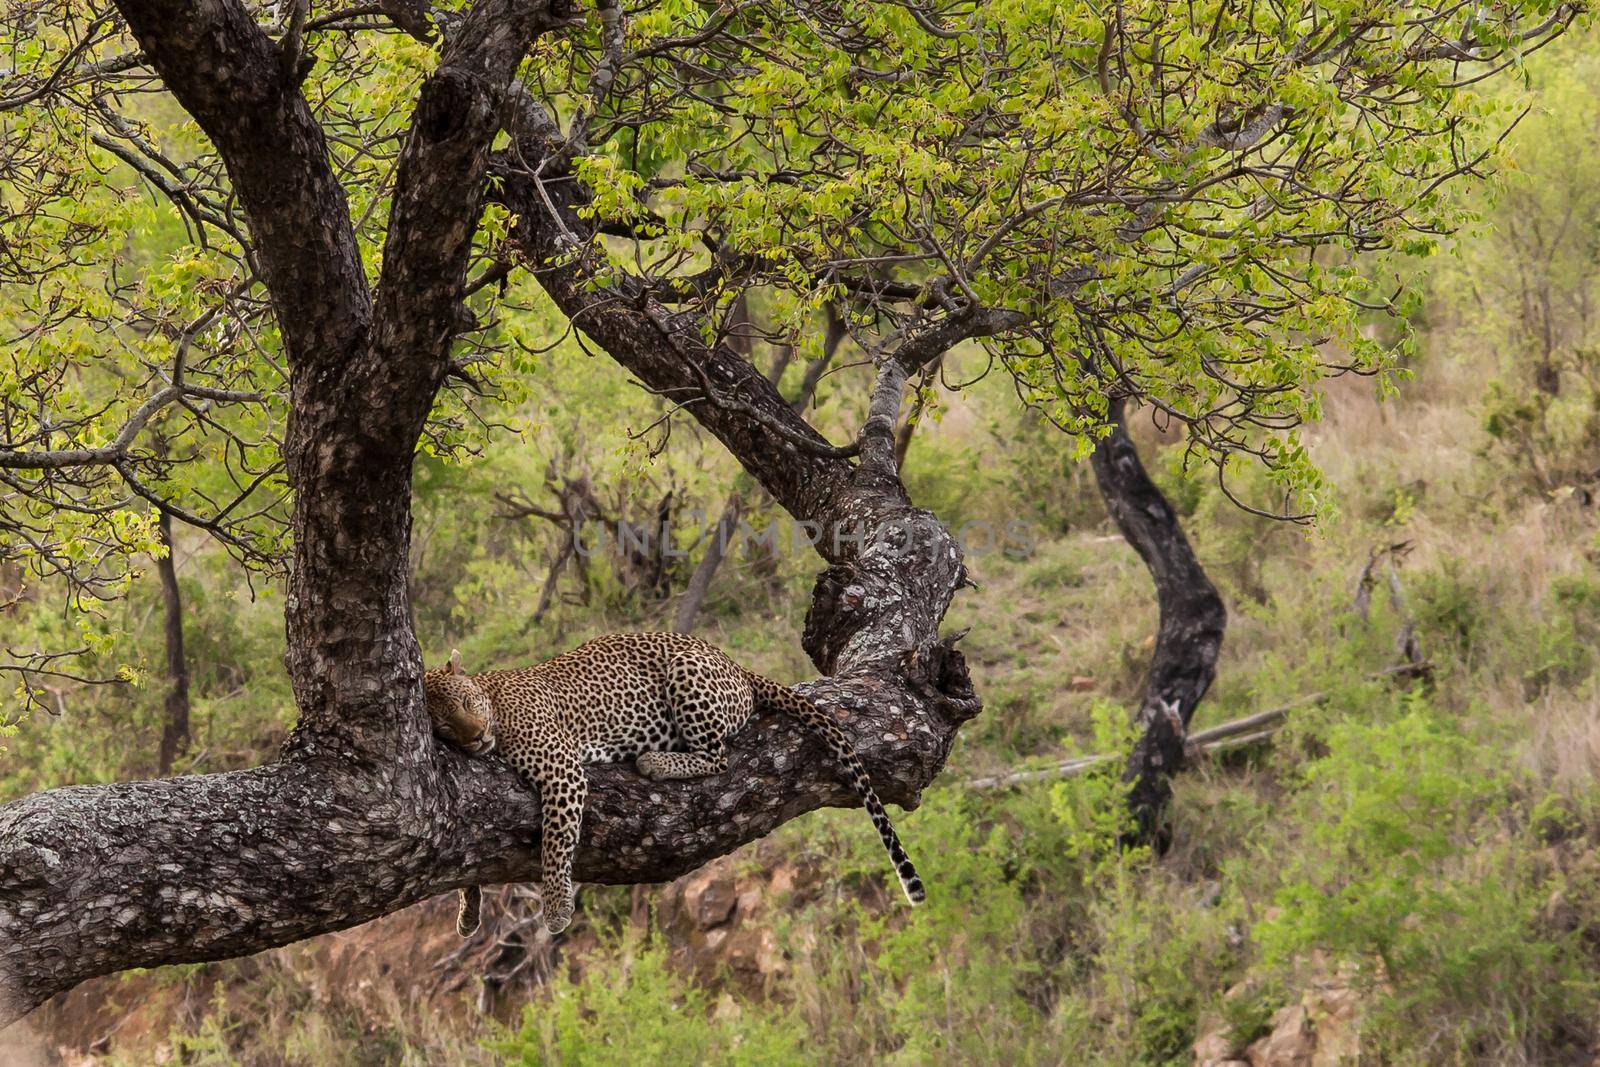 Sleeping Leopard (Panthera pardus) 14725 by kobus_peche